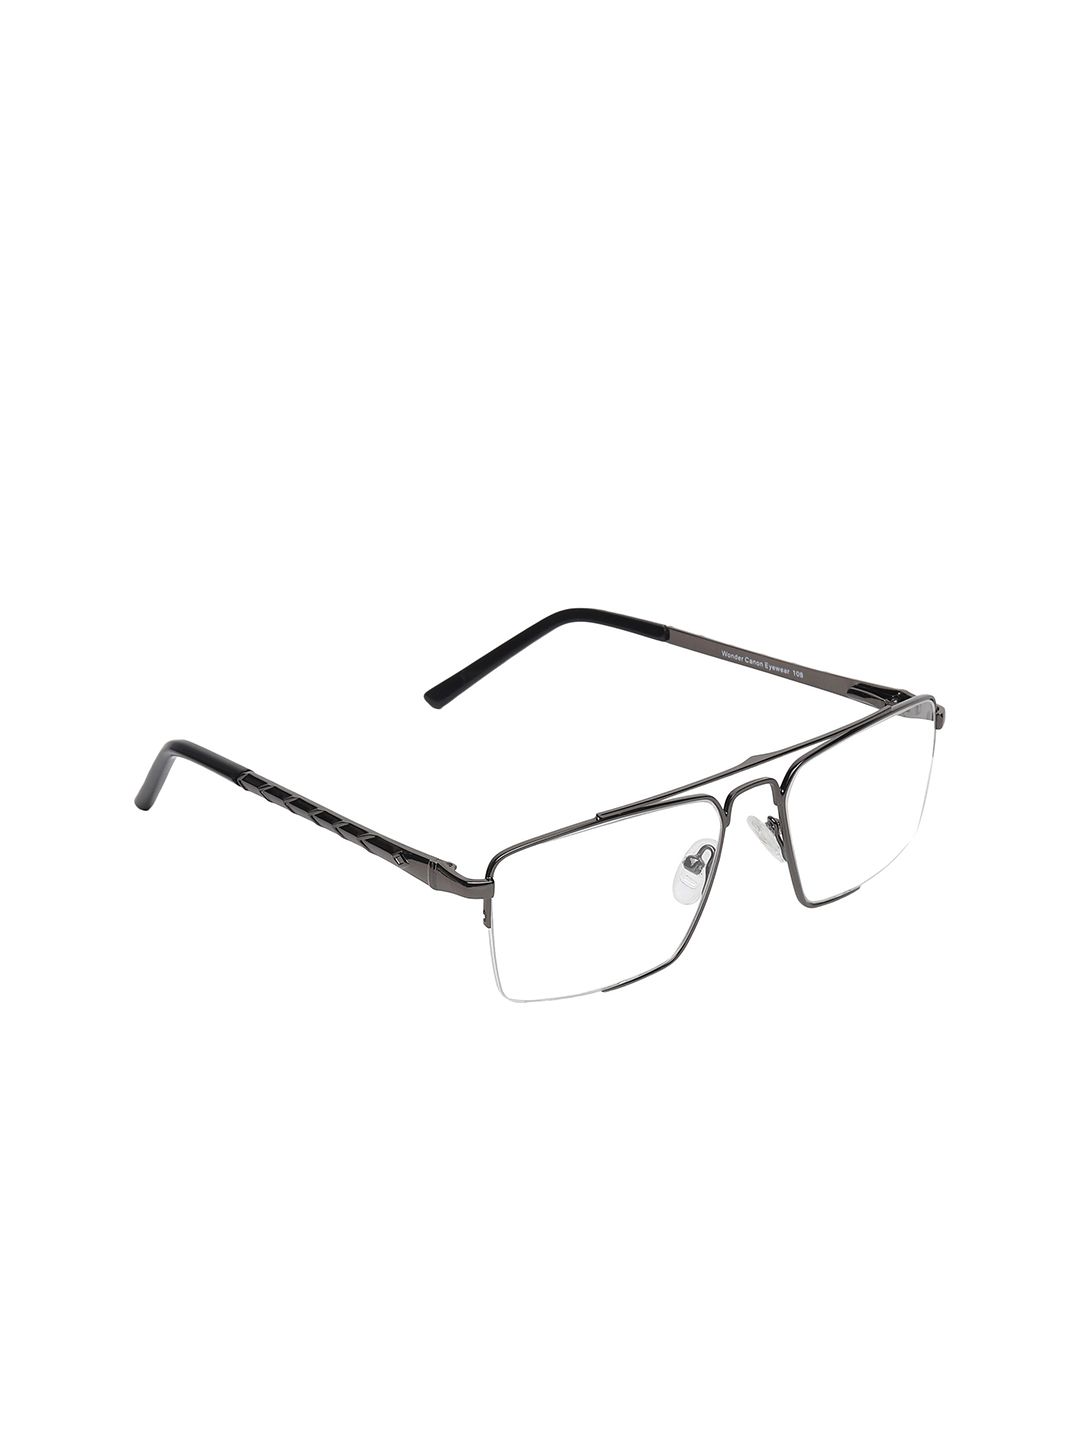 ALIGATORR Unisex Clear Lens & Black Aviator Sunglasses with UV Protected Lens Price in India